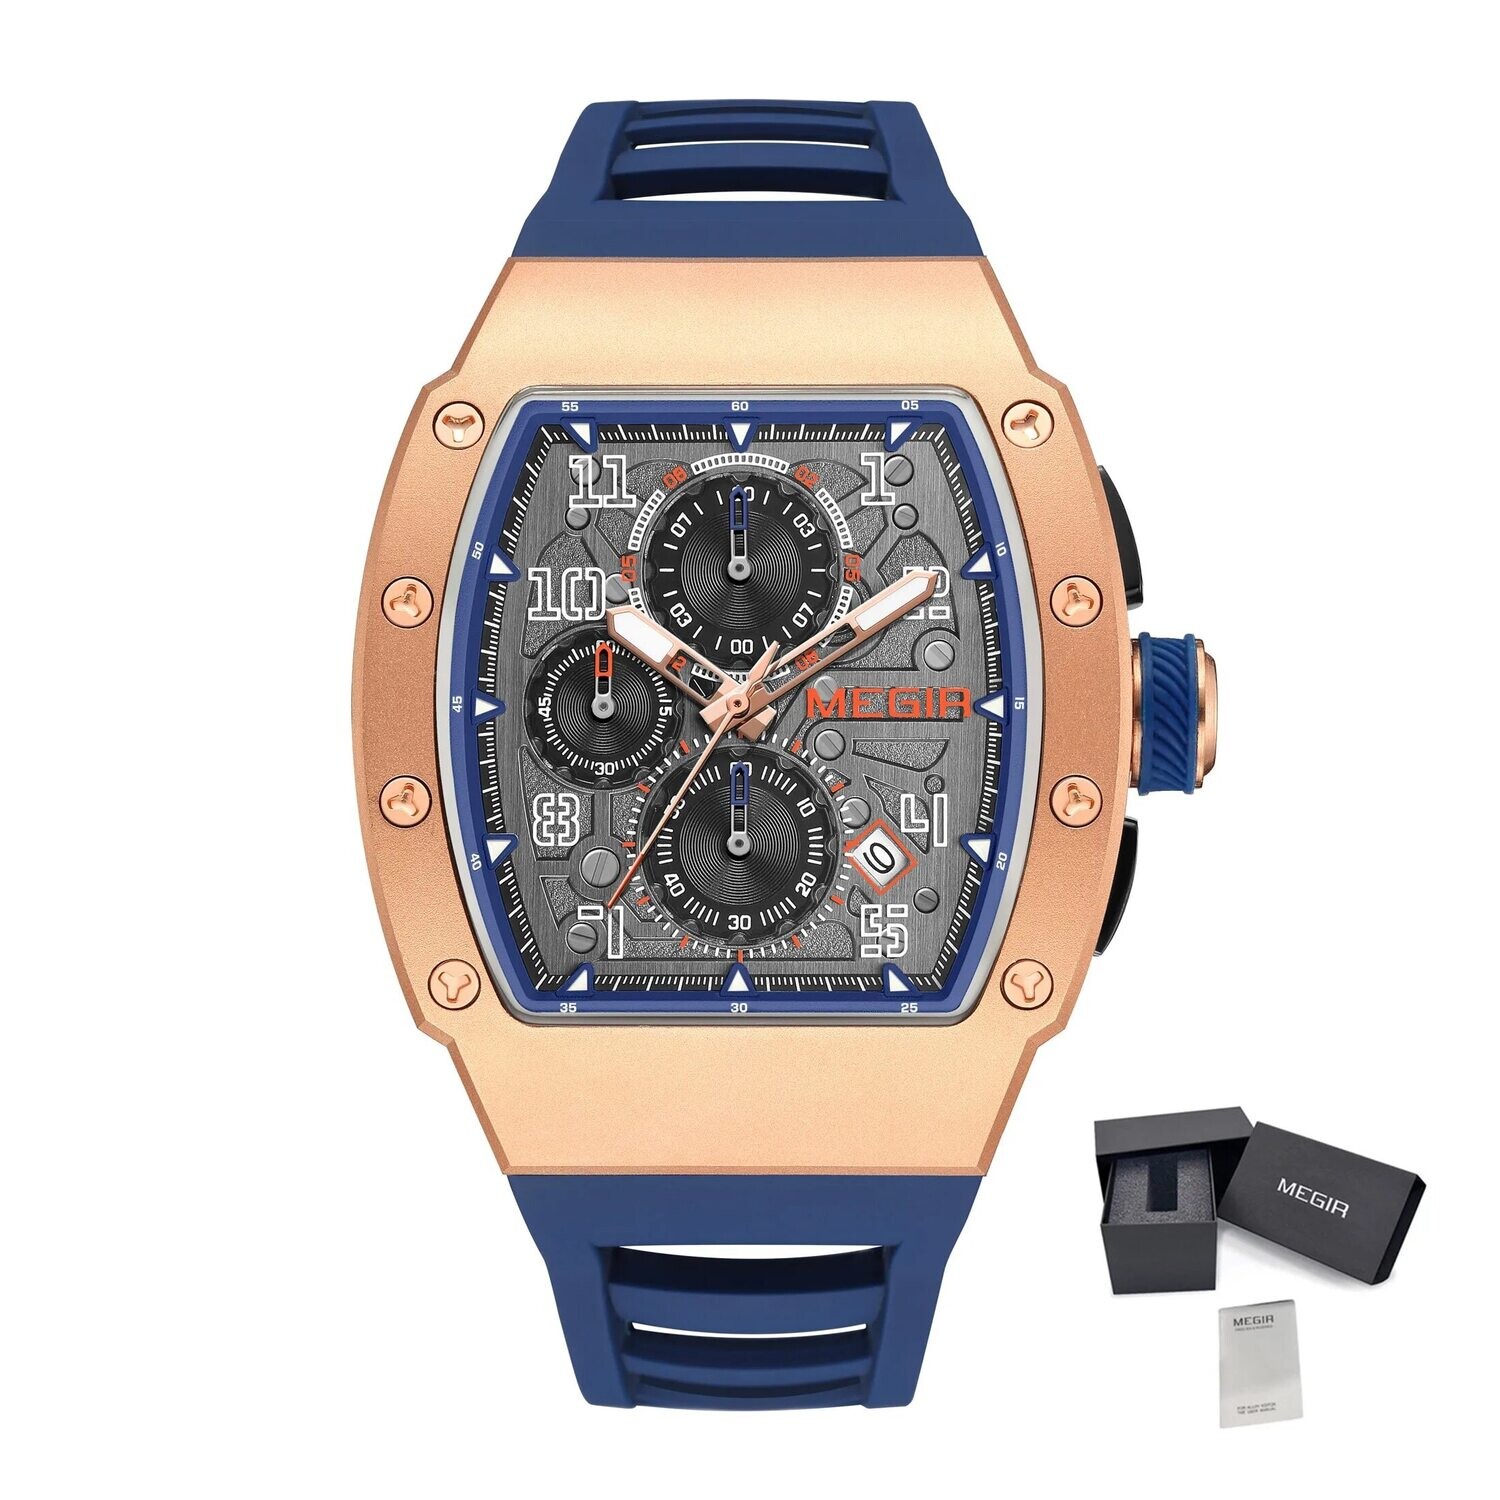 MEGIR New Fashion Quartz Watch Men Luxury Silicone Sport Military Wristwatch Chronograph Waterproof Date Clock Relogio Masculino